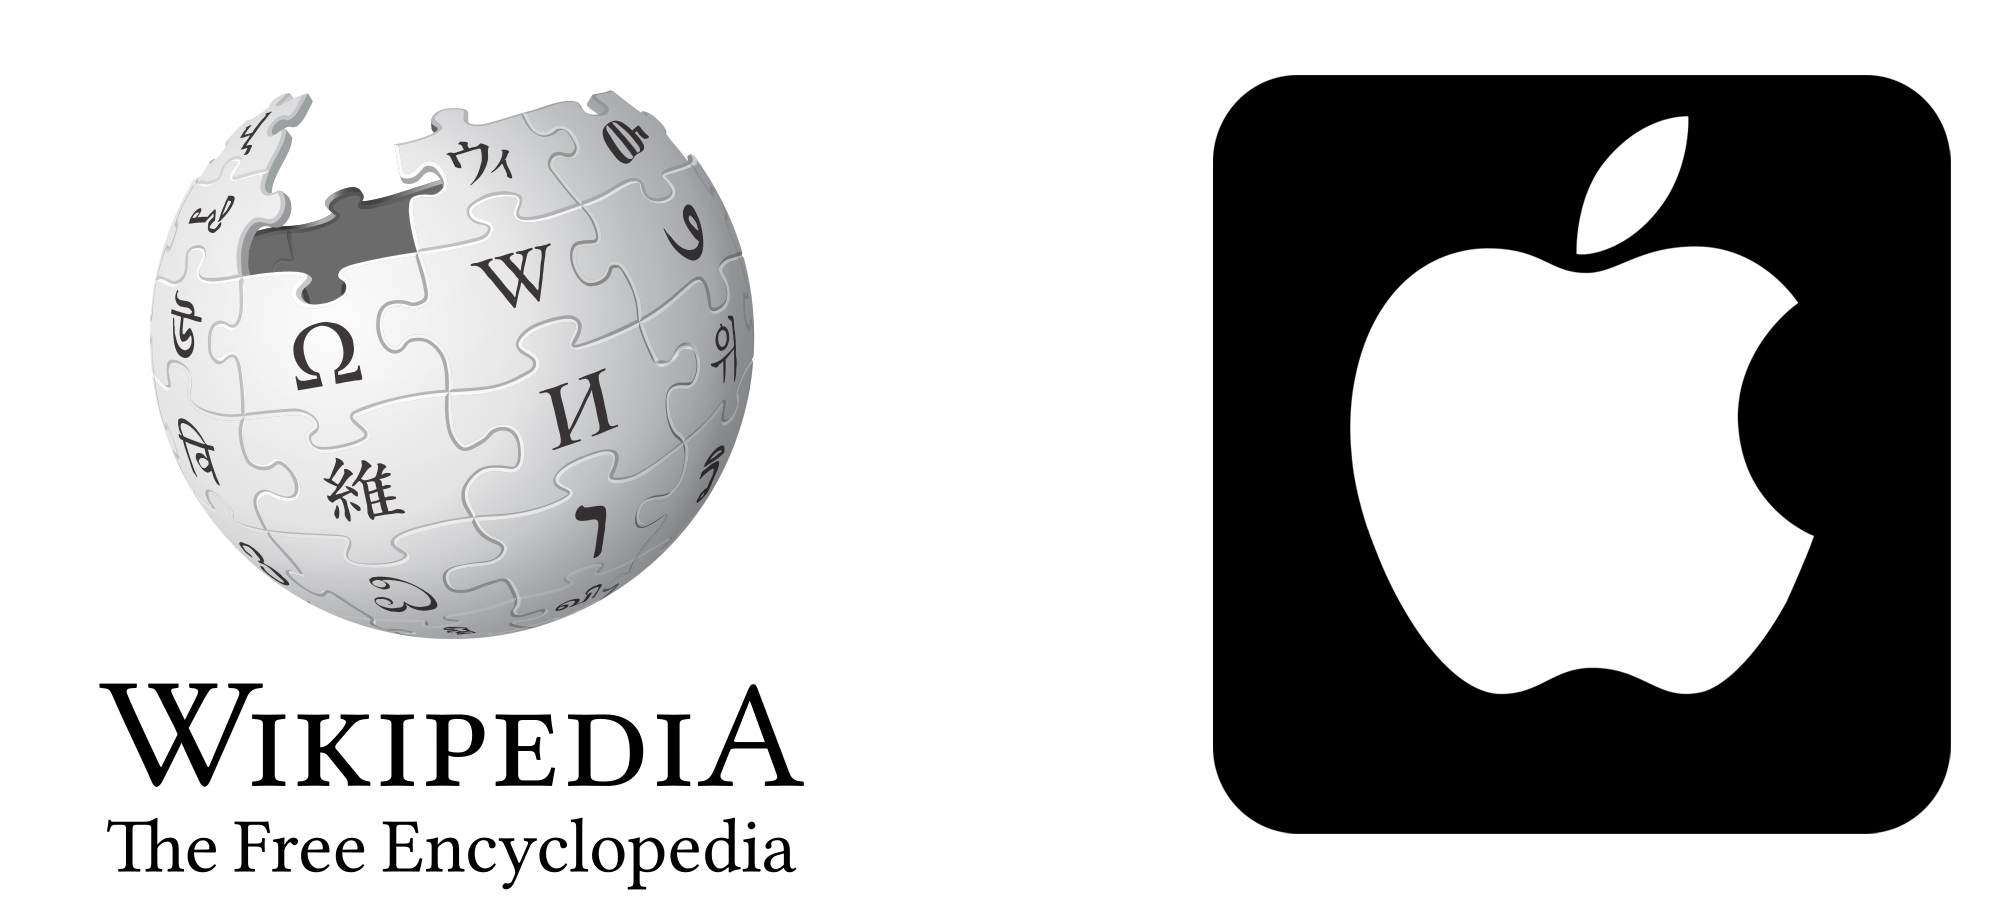 Логотипы интернет-энциклопедии Wikipedia	и  производителя цифровой техники и  электроники Apple